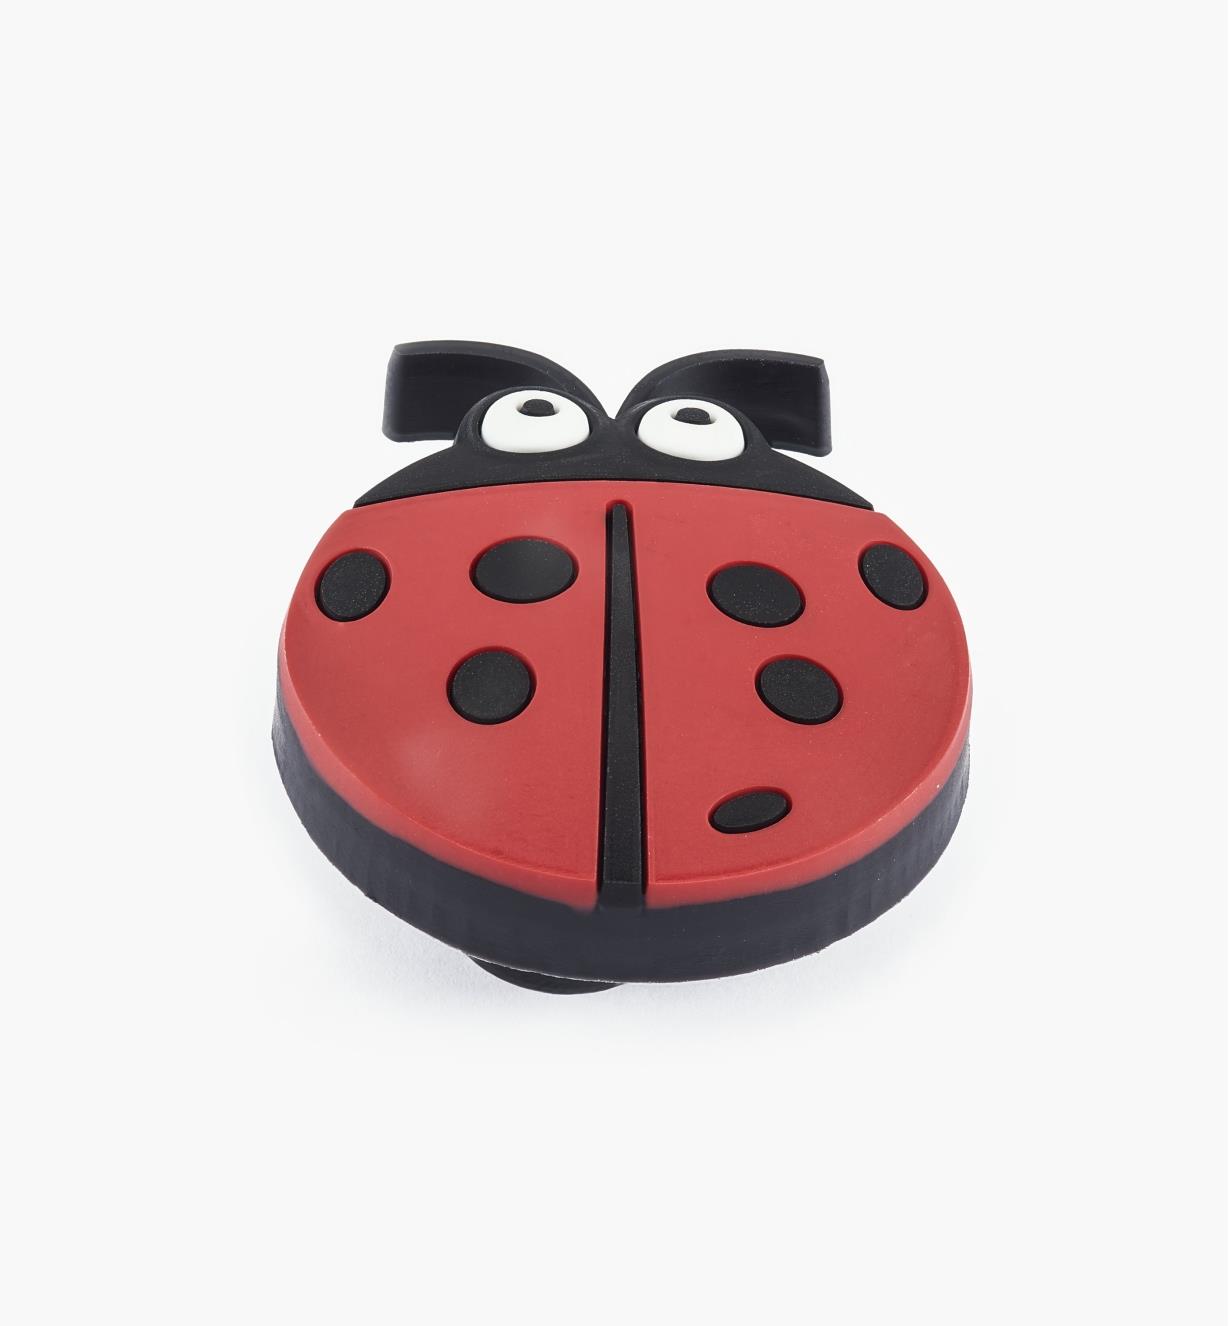 00W5620 - Ladybug Knob